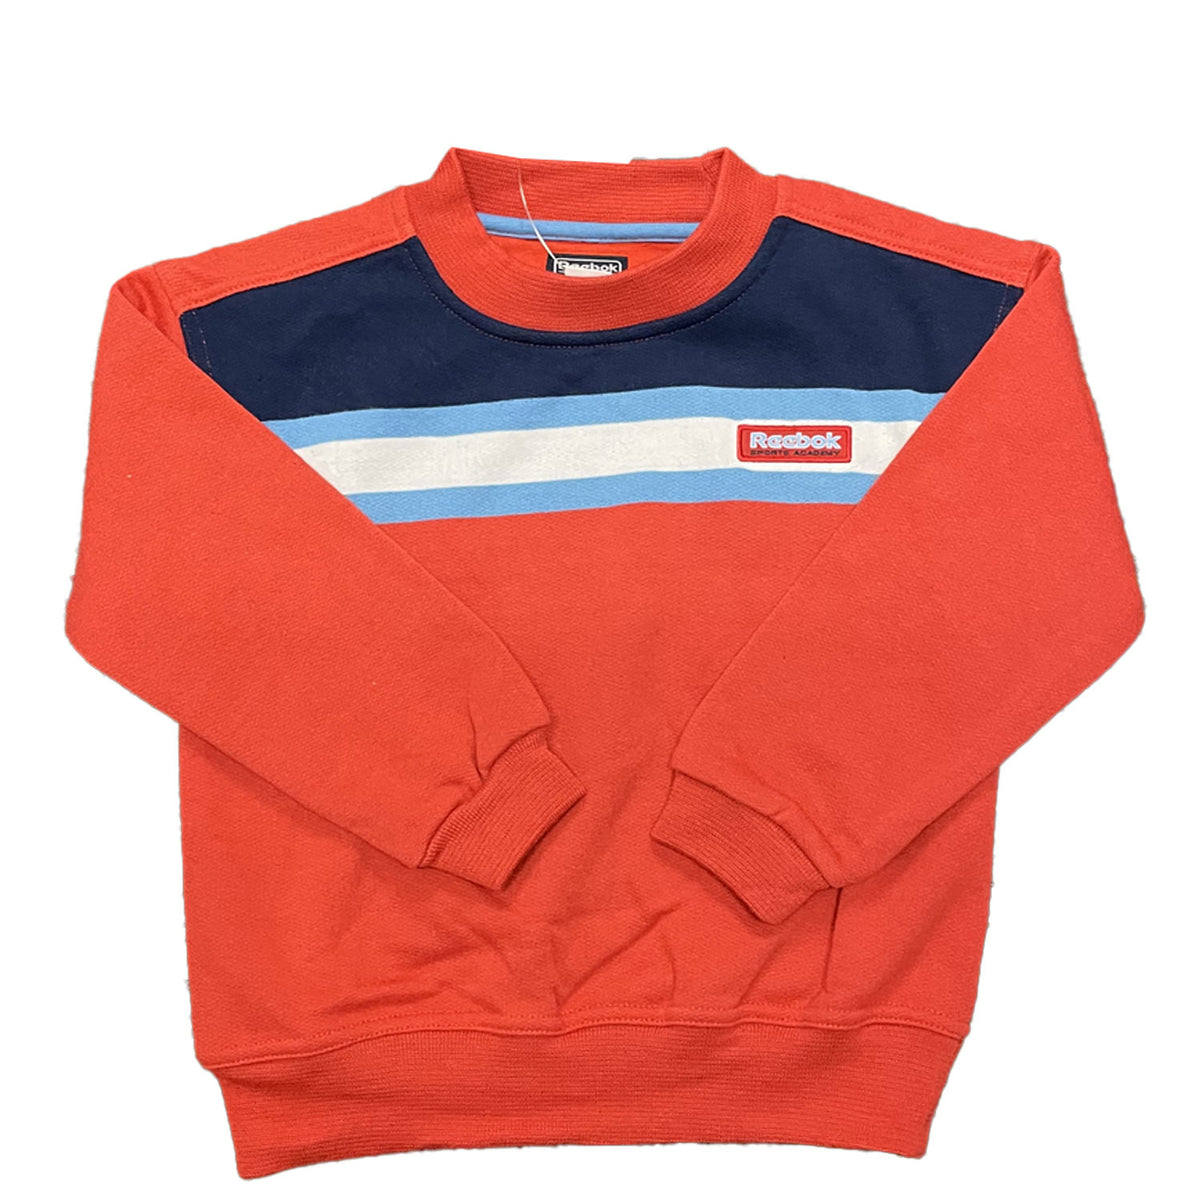 Reebok's Infant Sports Academy Sweatshirt